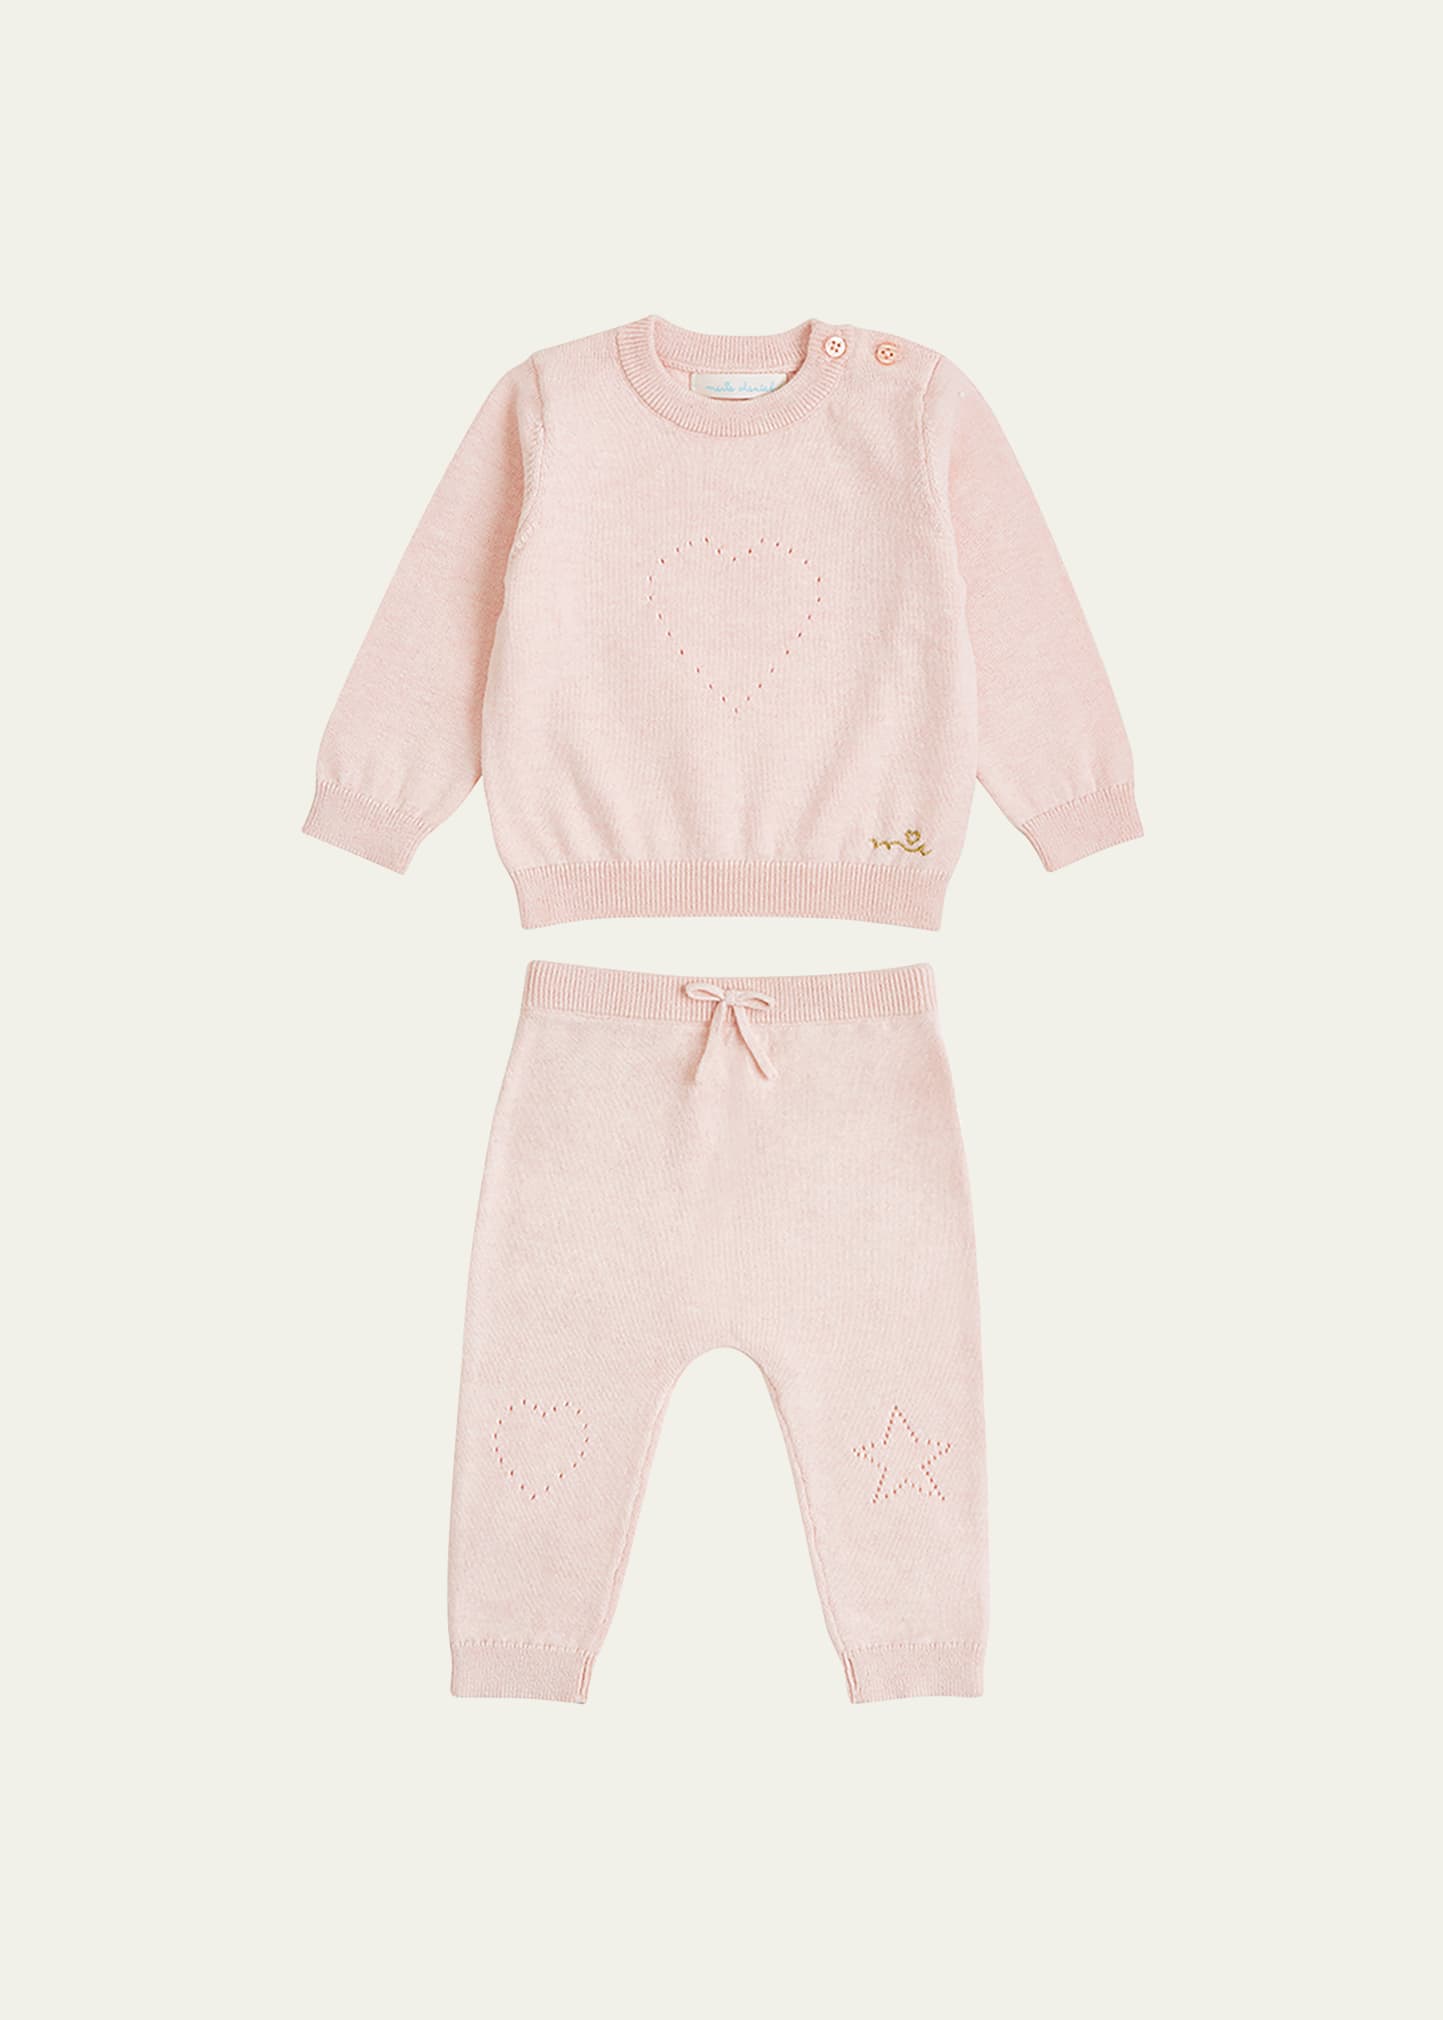 Marie Chantal Kids' Girl's Pointelle Heart Two-piece Set In Pink